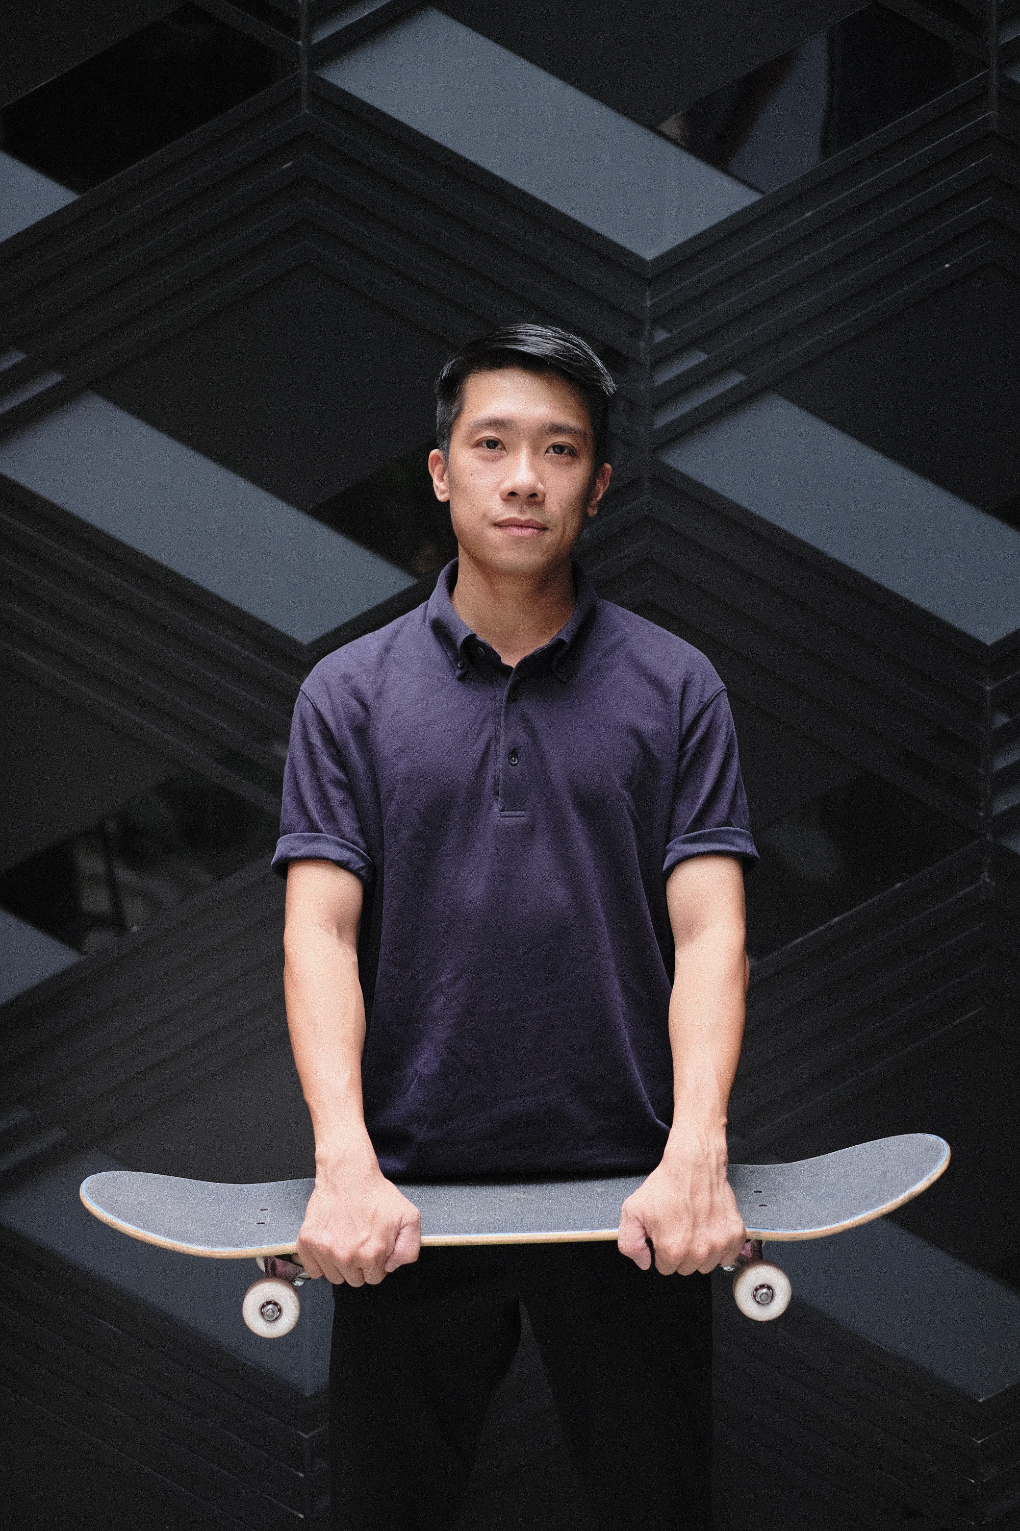 MF - meet the street artist - Đỗ Ngọc Linh skater